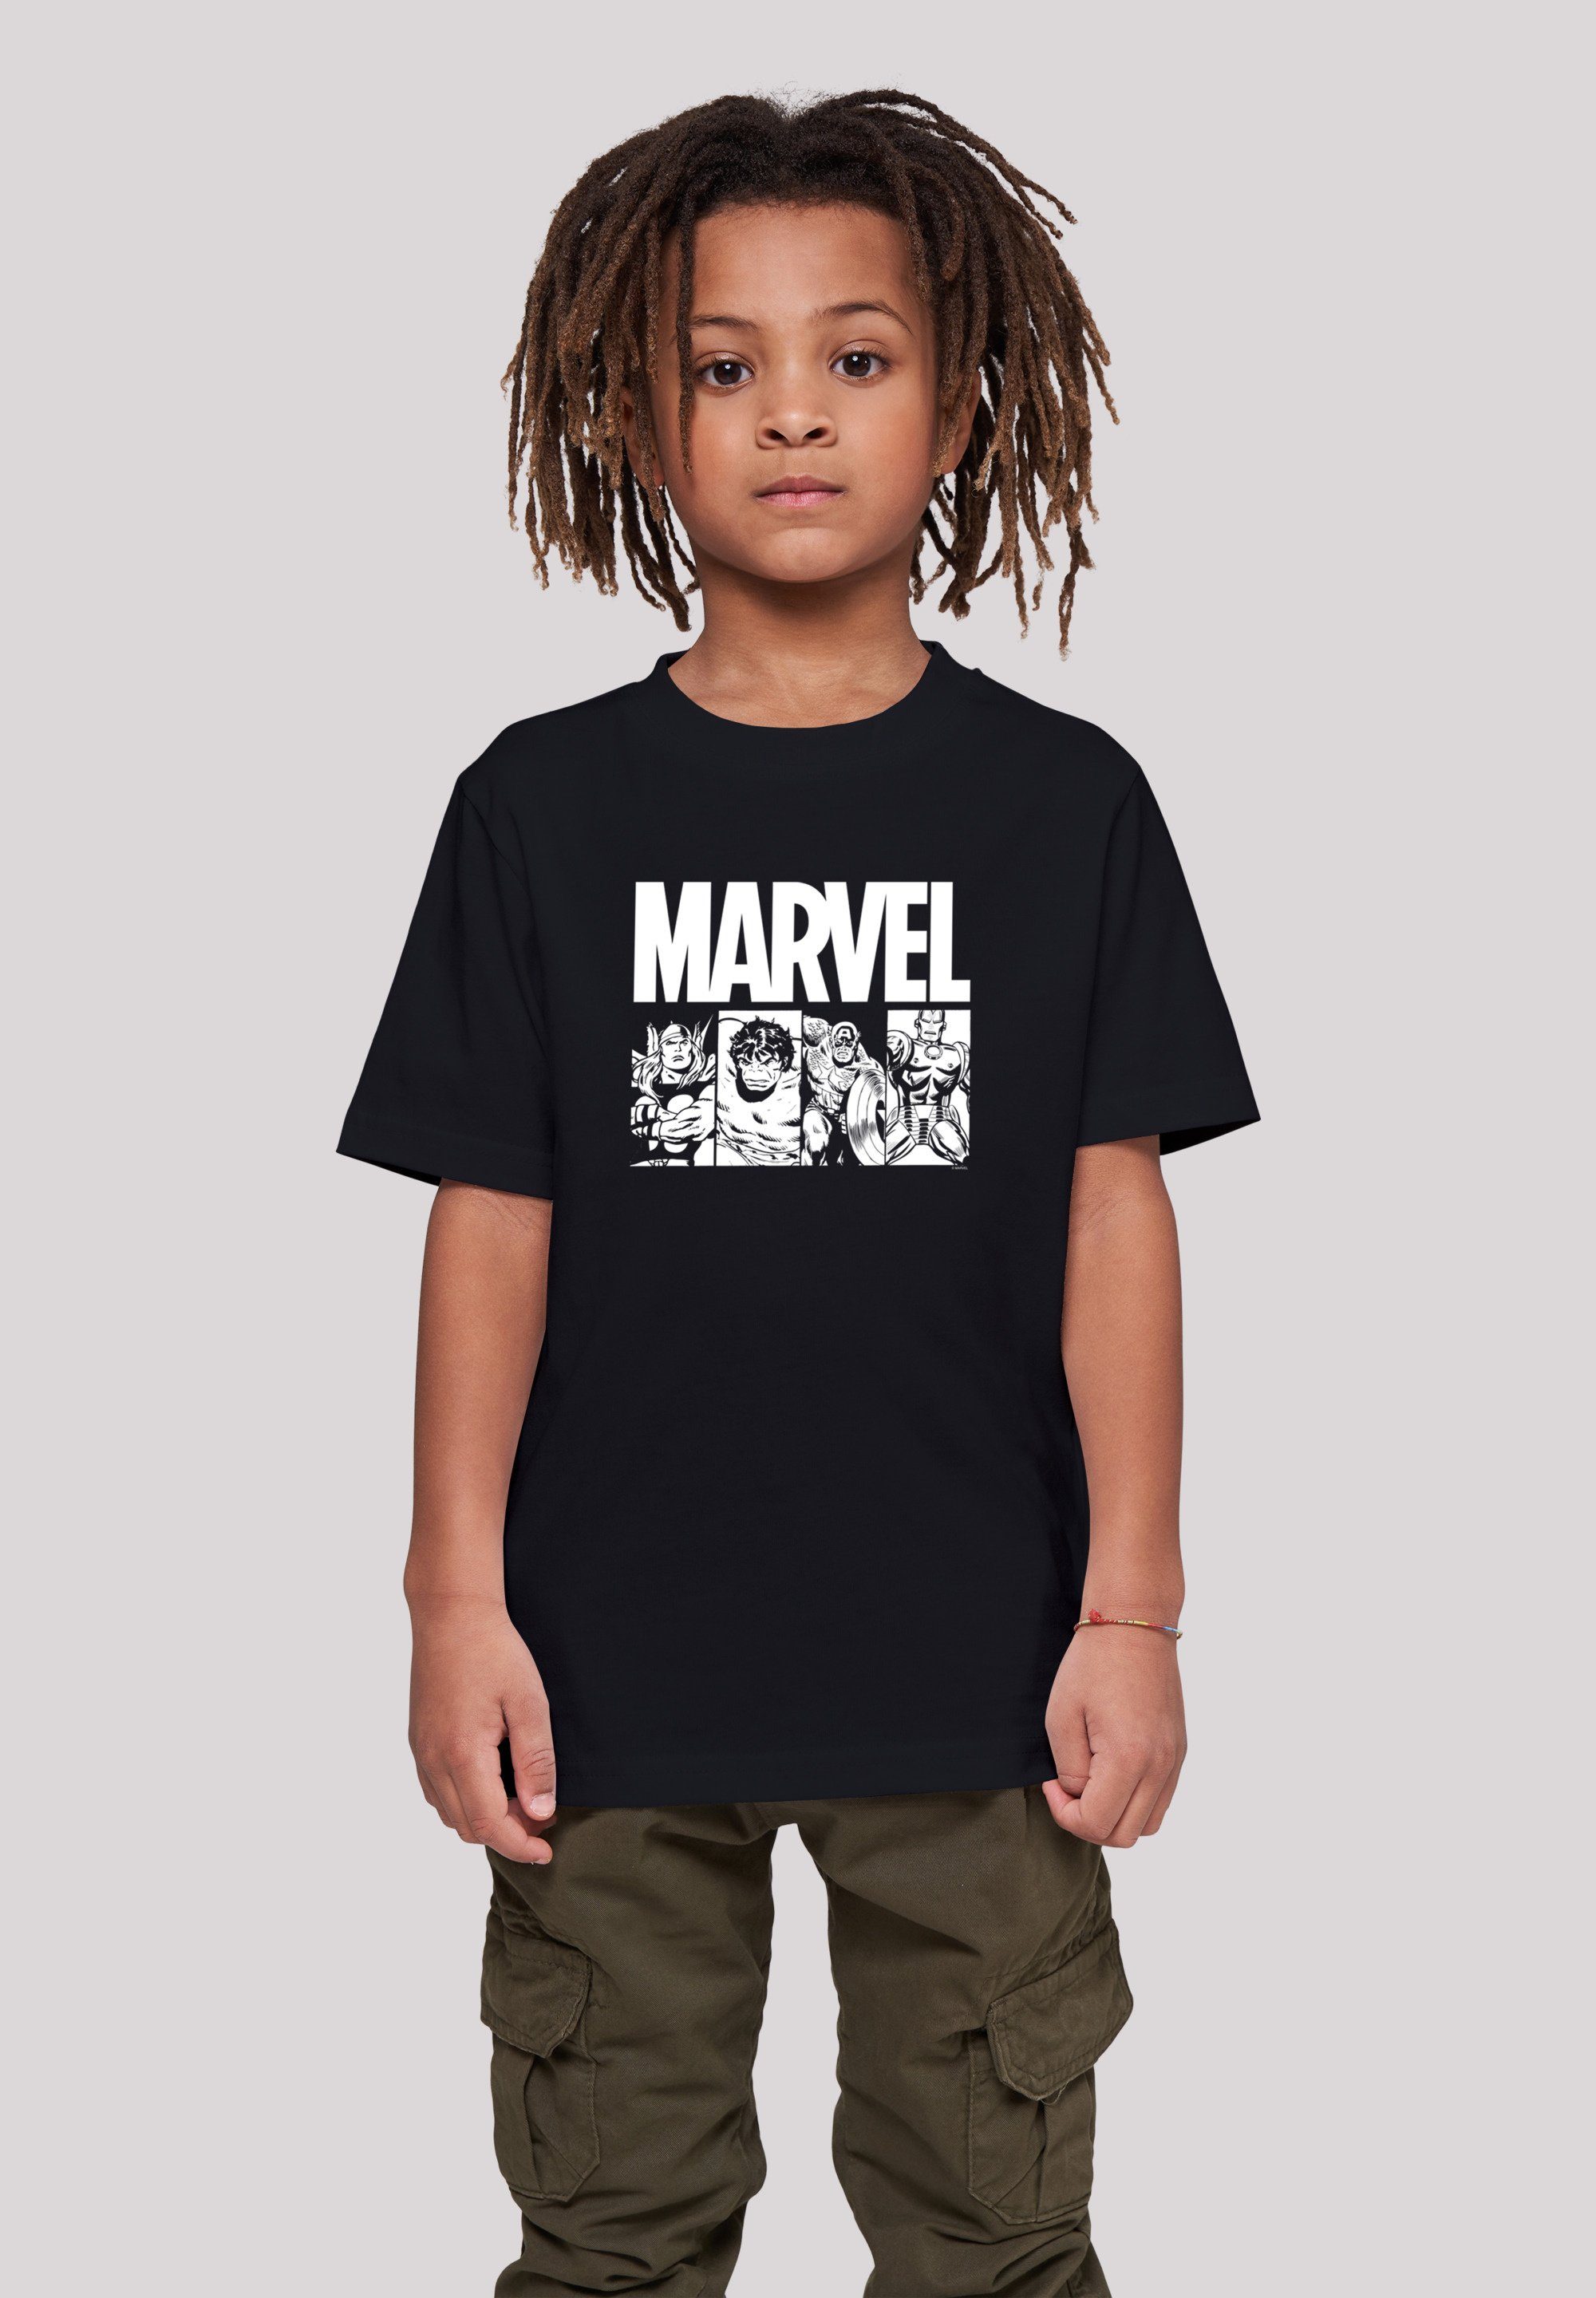 Merch,Jungen,Mädchen,Logo Unisex Tiles Action Comics Print Kinder,Premium Marvel T-Shirt F4NT4STIC